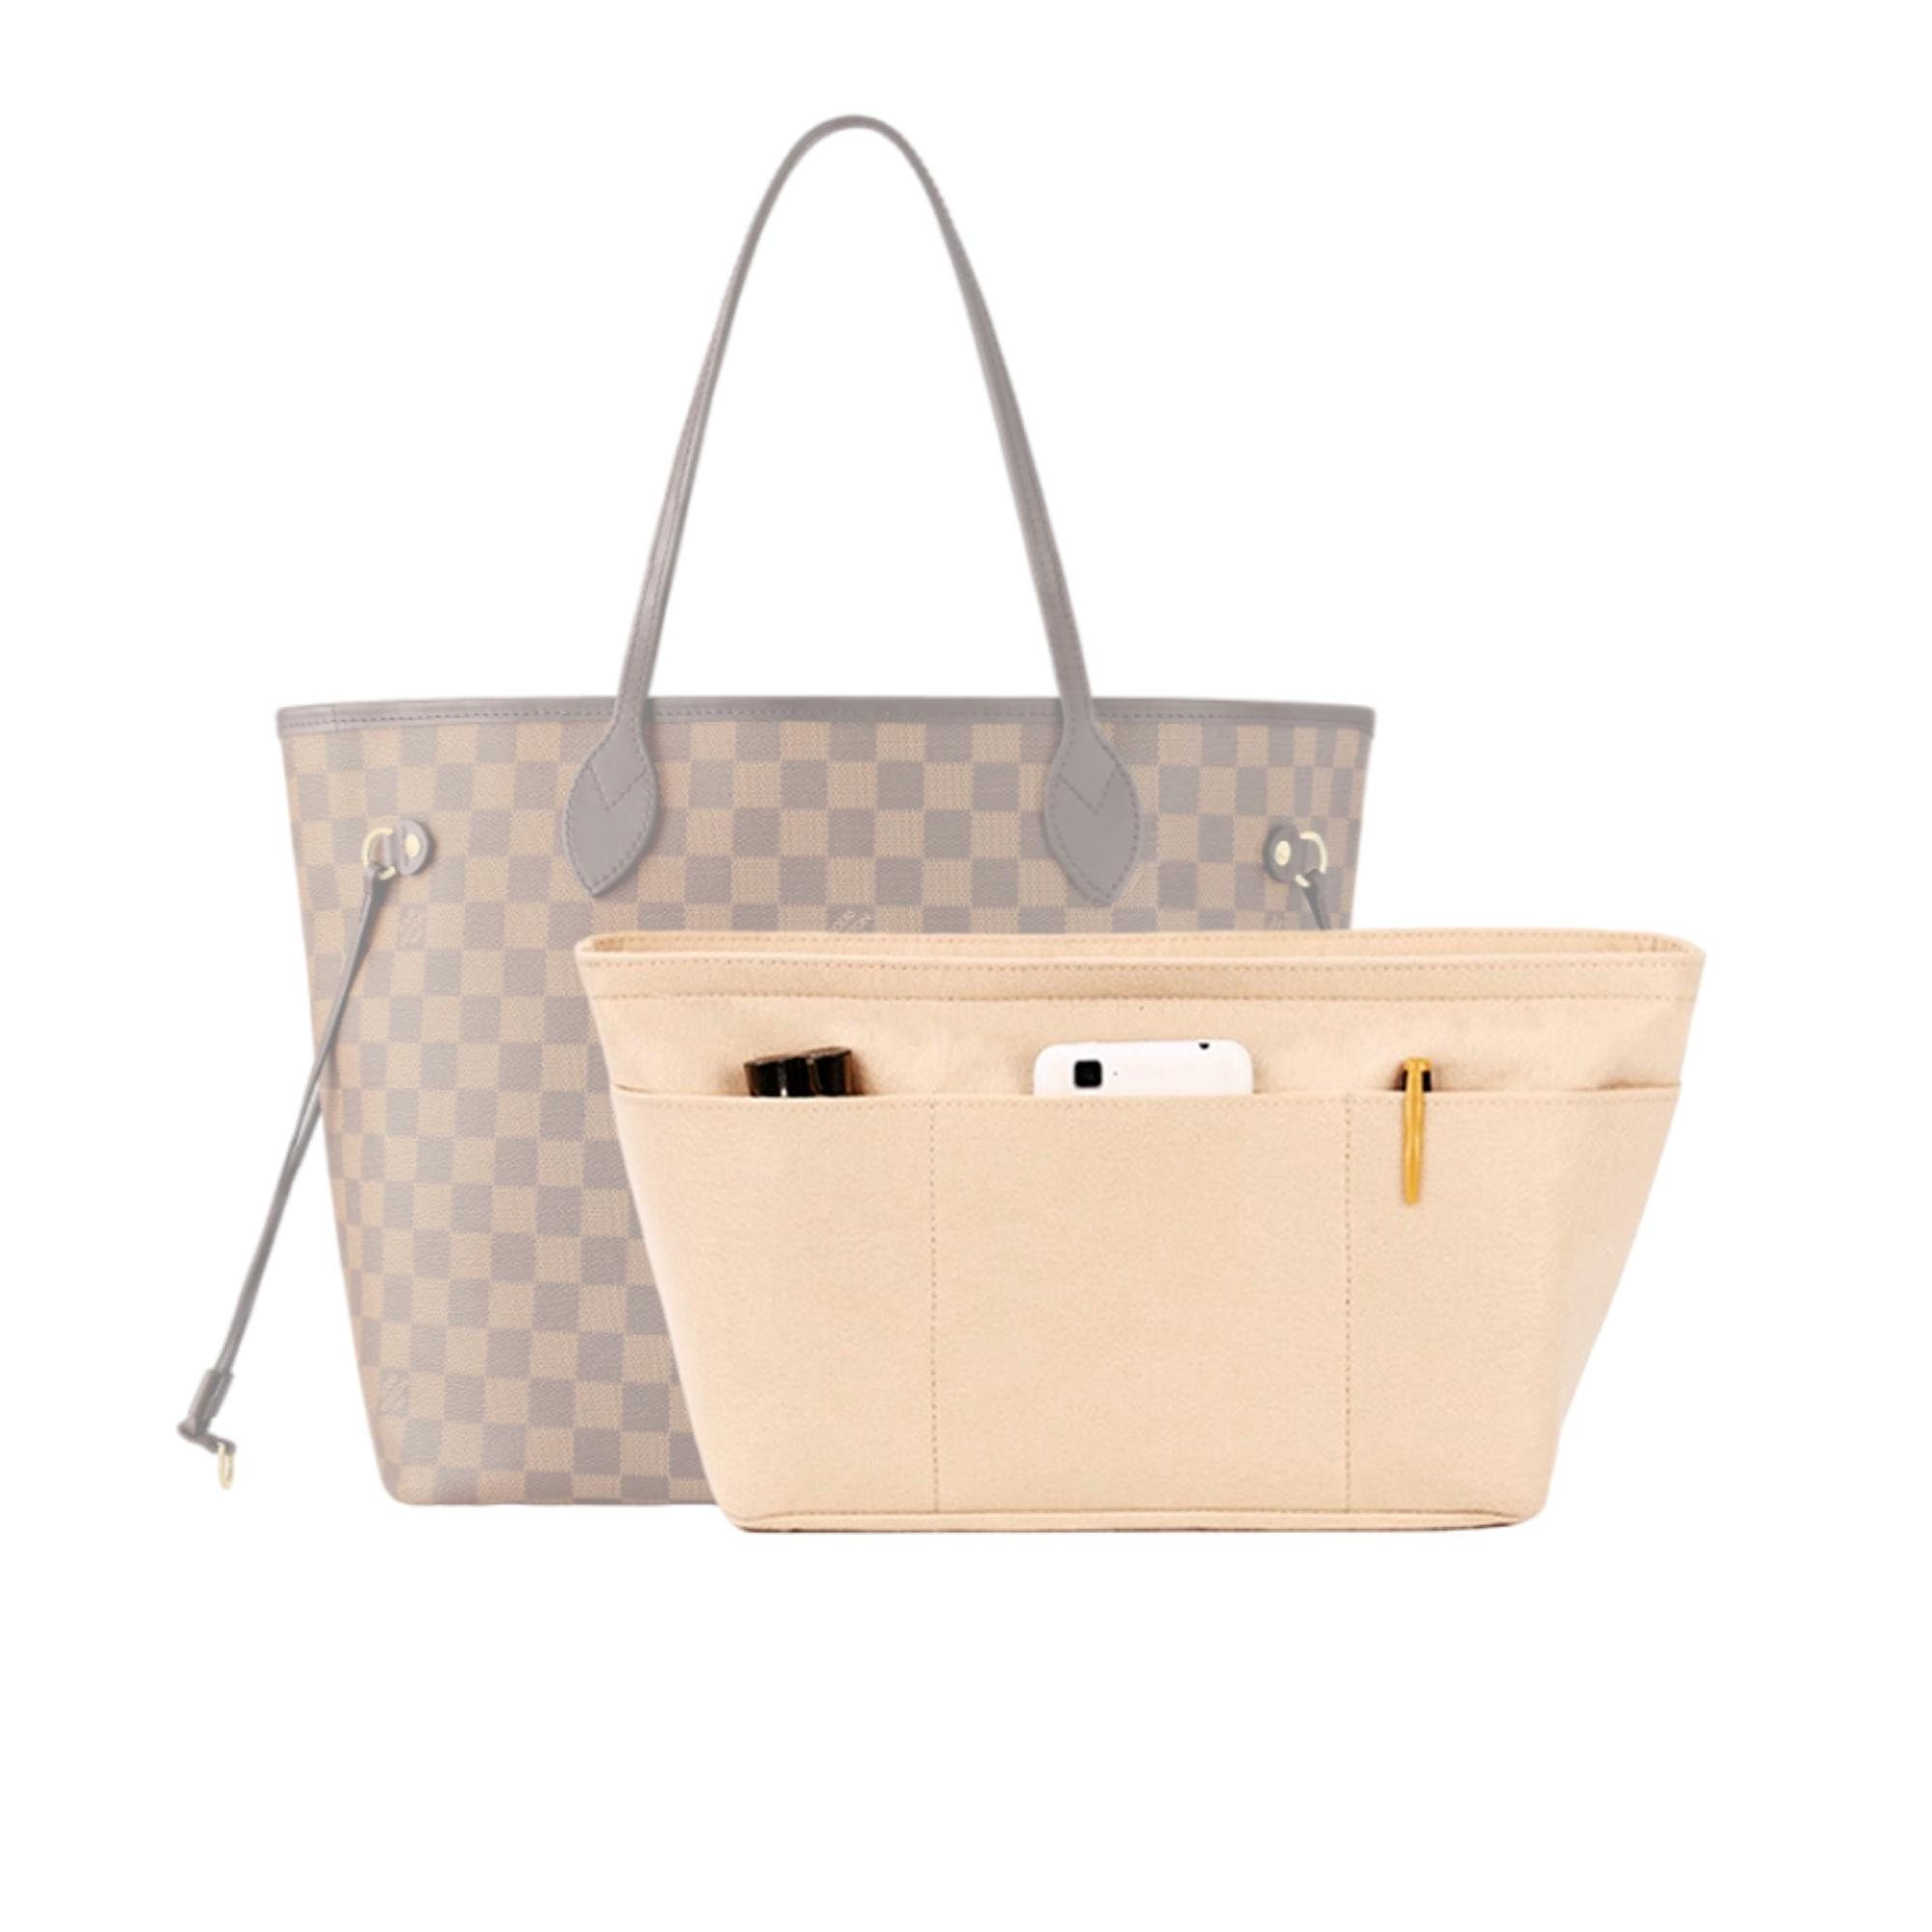 Base Shaper 1/16” Lightweight Clear Acrylic fits LV Louis Vuitton Neverfull  GM - Tote Handbag Liner, Bag, Purse Insert, Plexiglas, Plexiglass Bottom,  Plastic